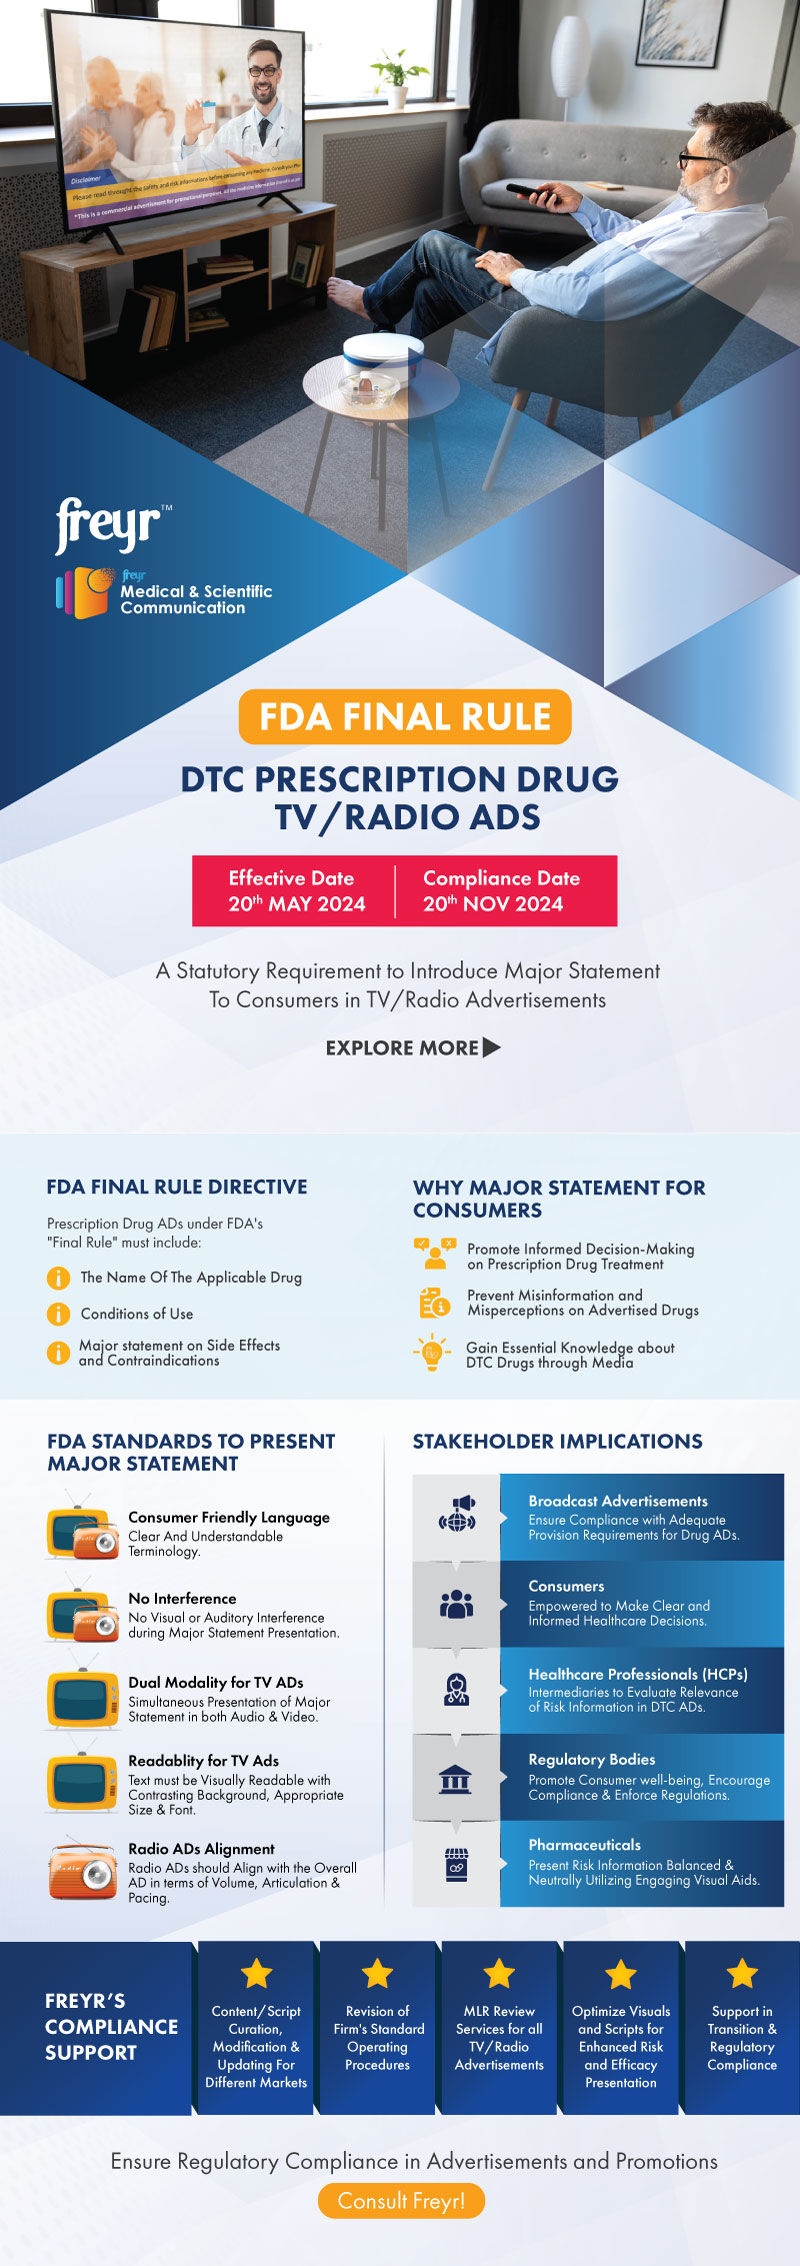 
FDA Final Rule DTC Prescription Drug Tv/Radio Ads
